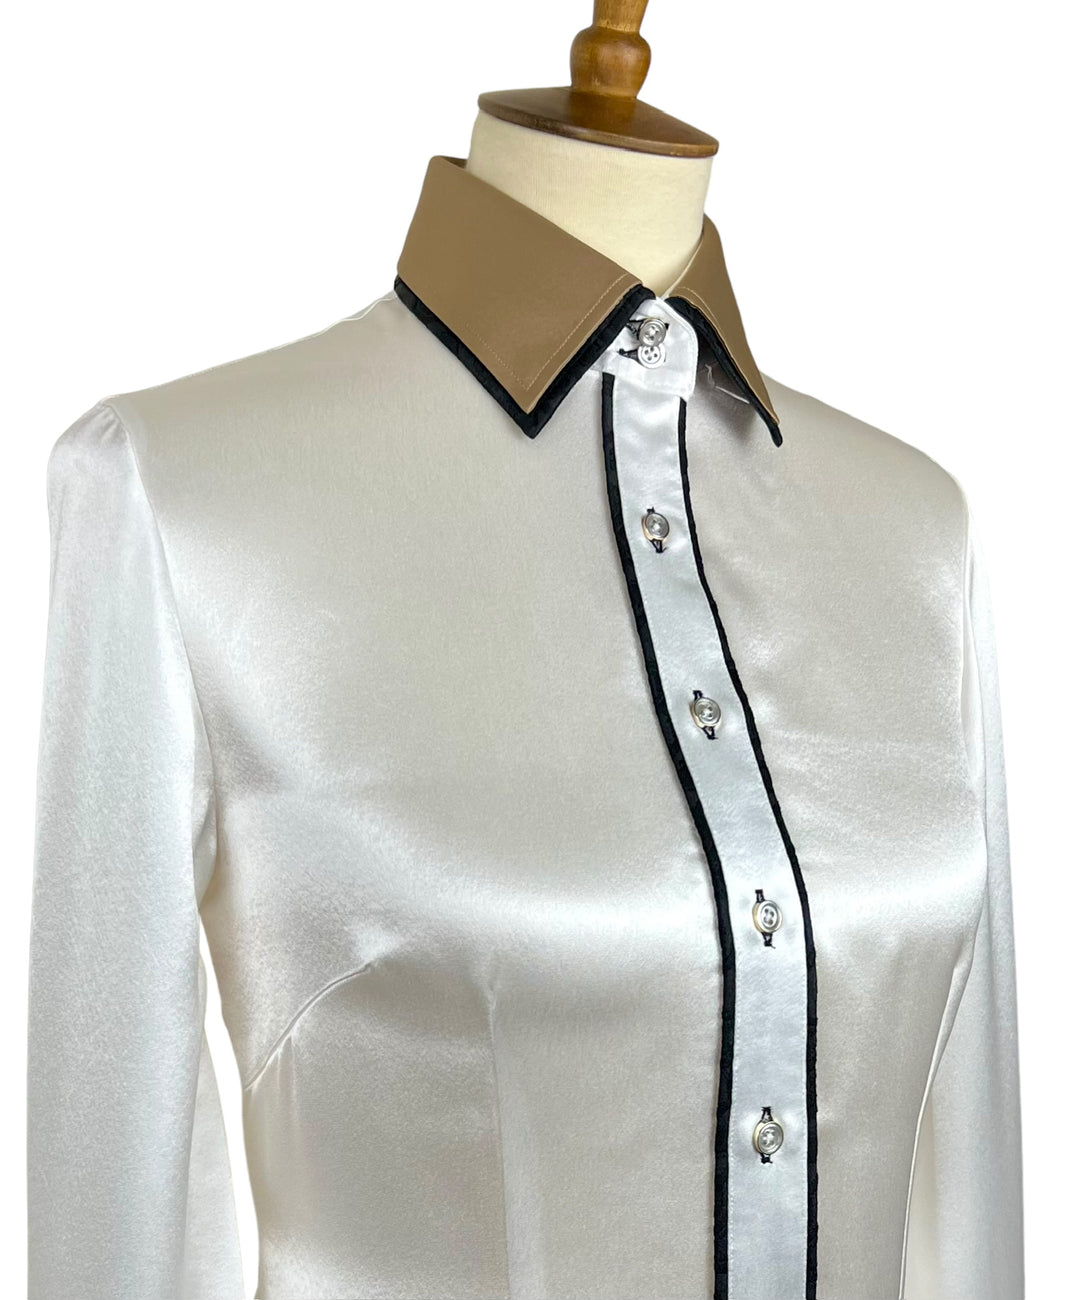 The Etta Halter Vest & Shirt Set